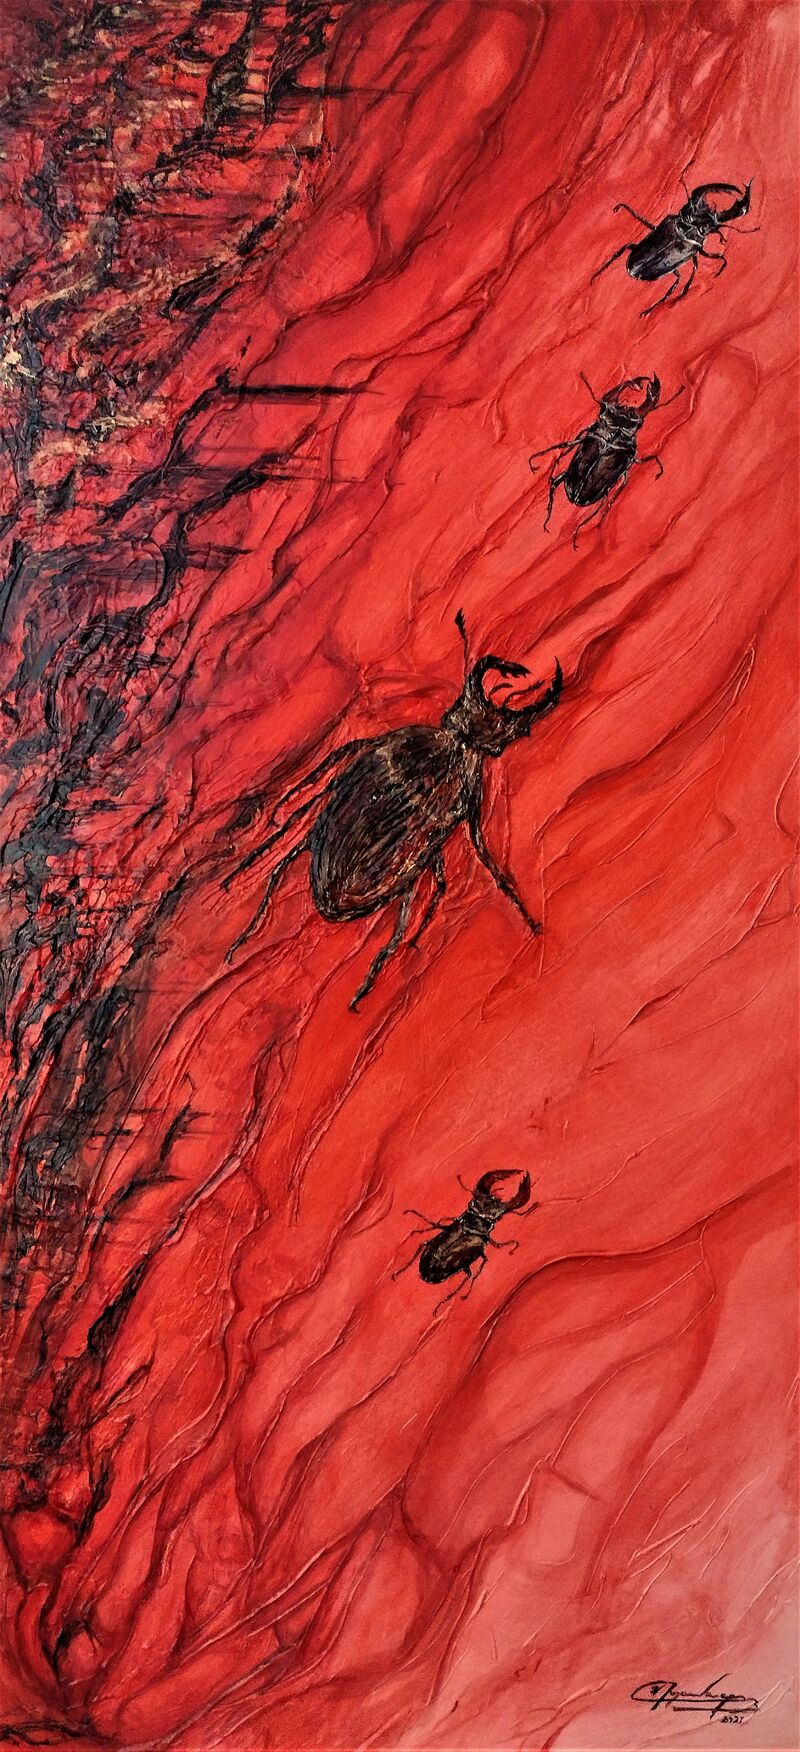 RED # 1 - a Paint by Carolina Moyano Vargas